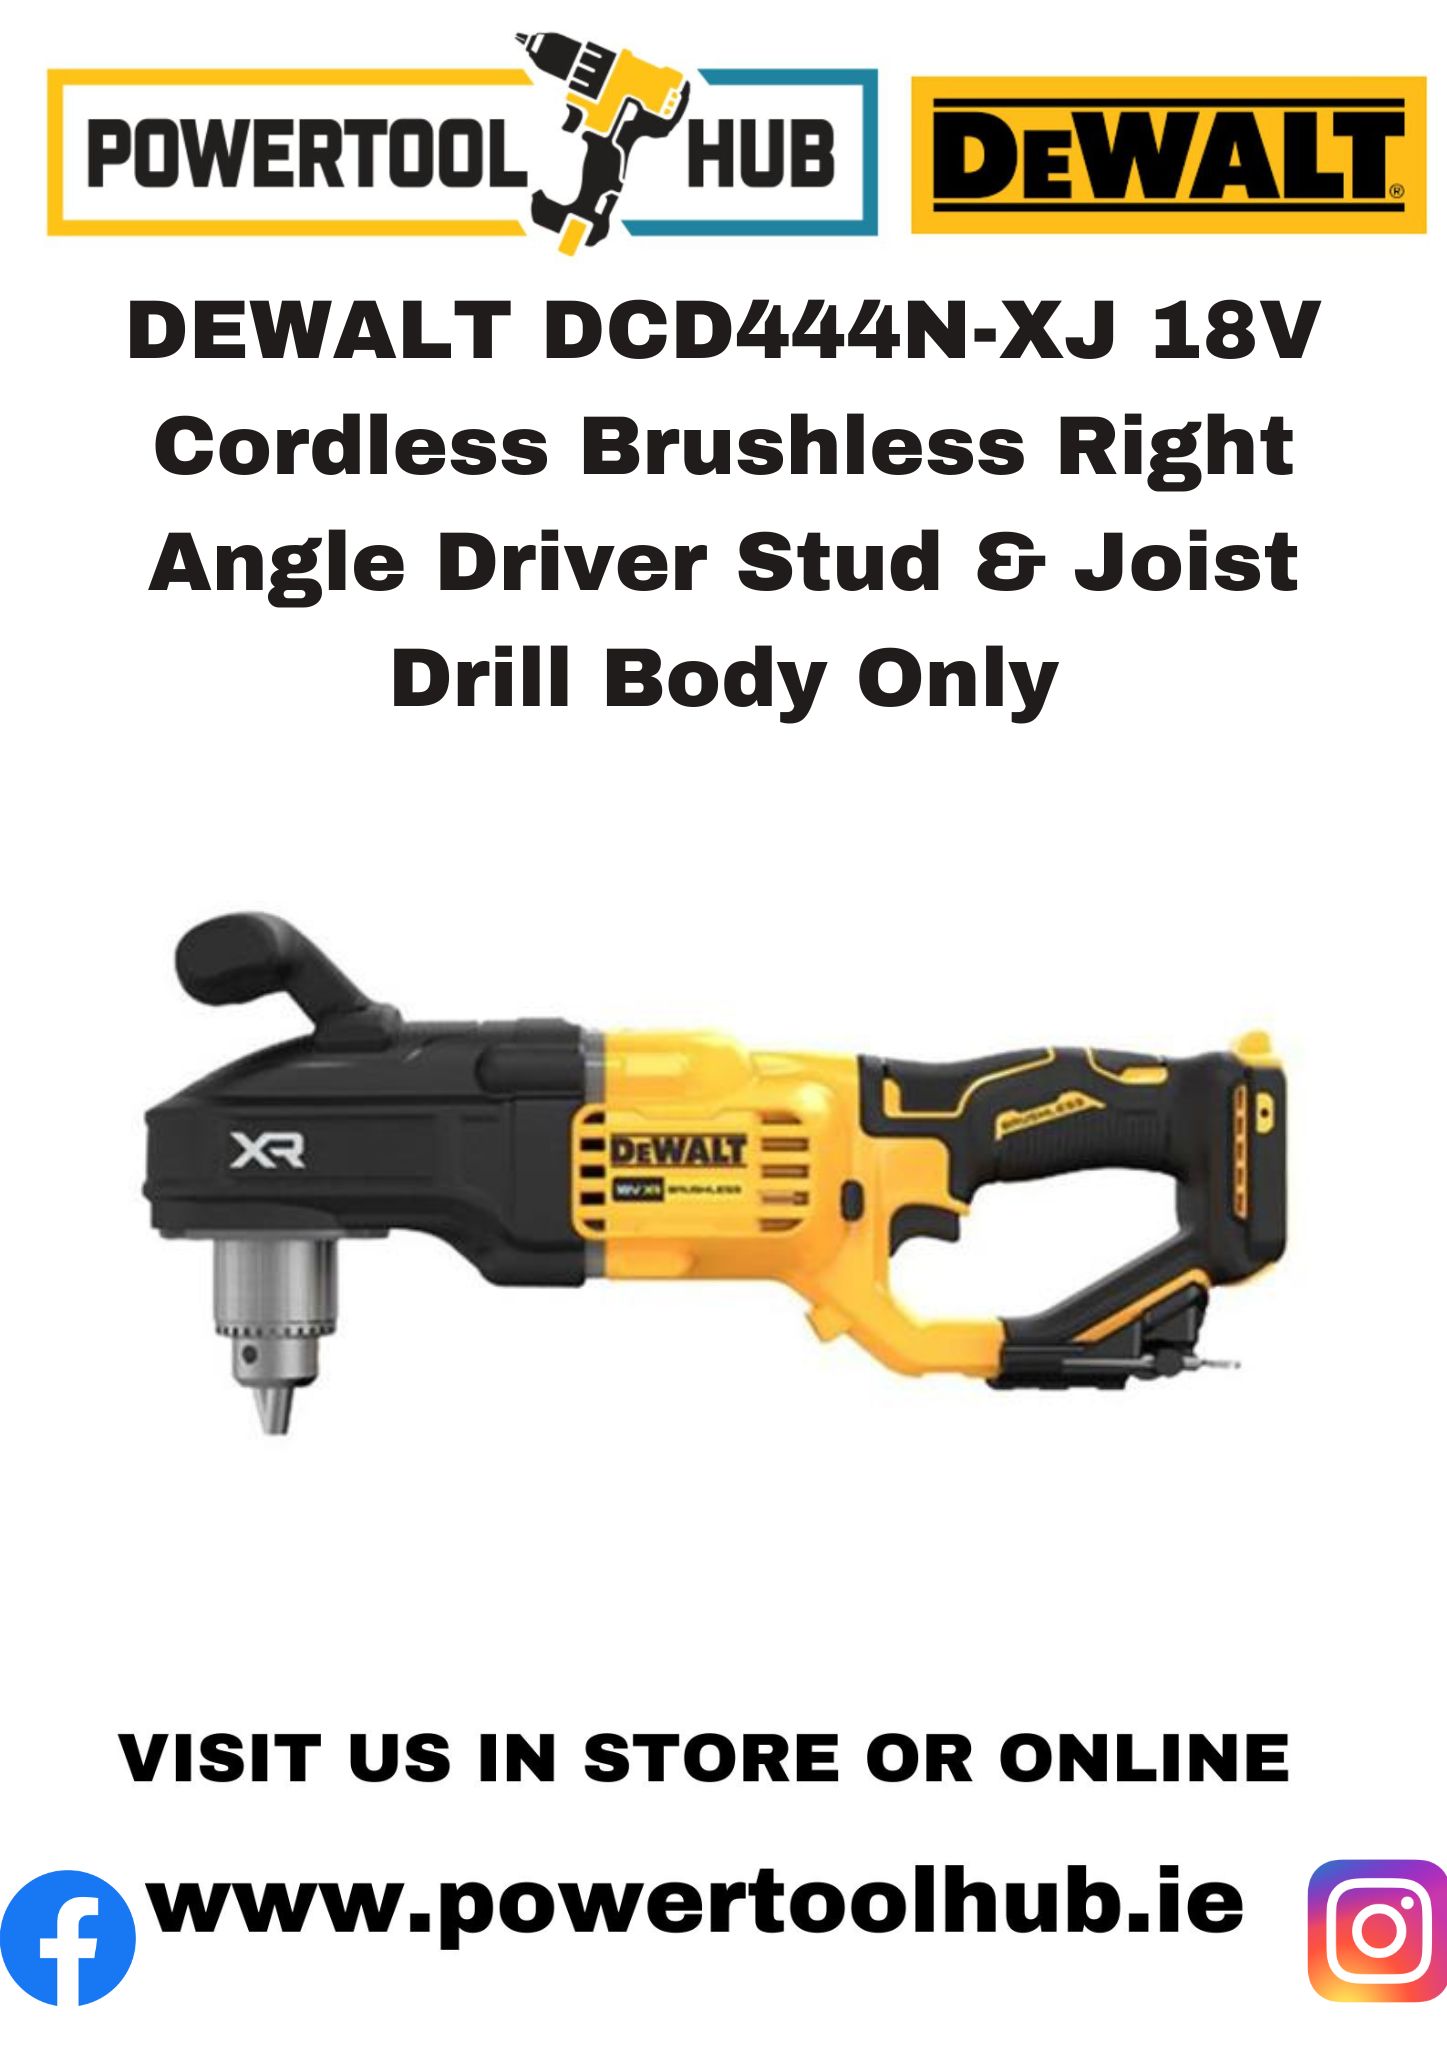 Auto Feed Drills /Angle Drills /Mag Drill